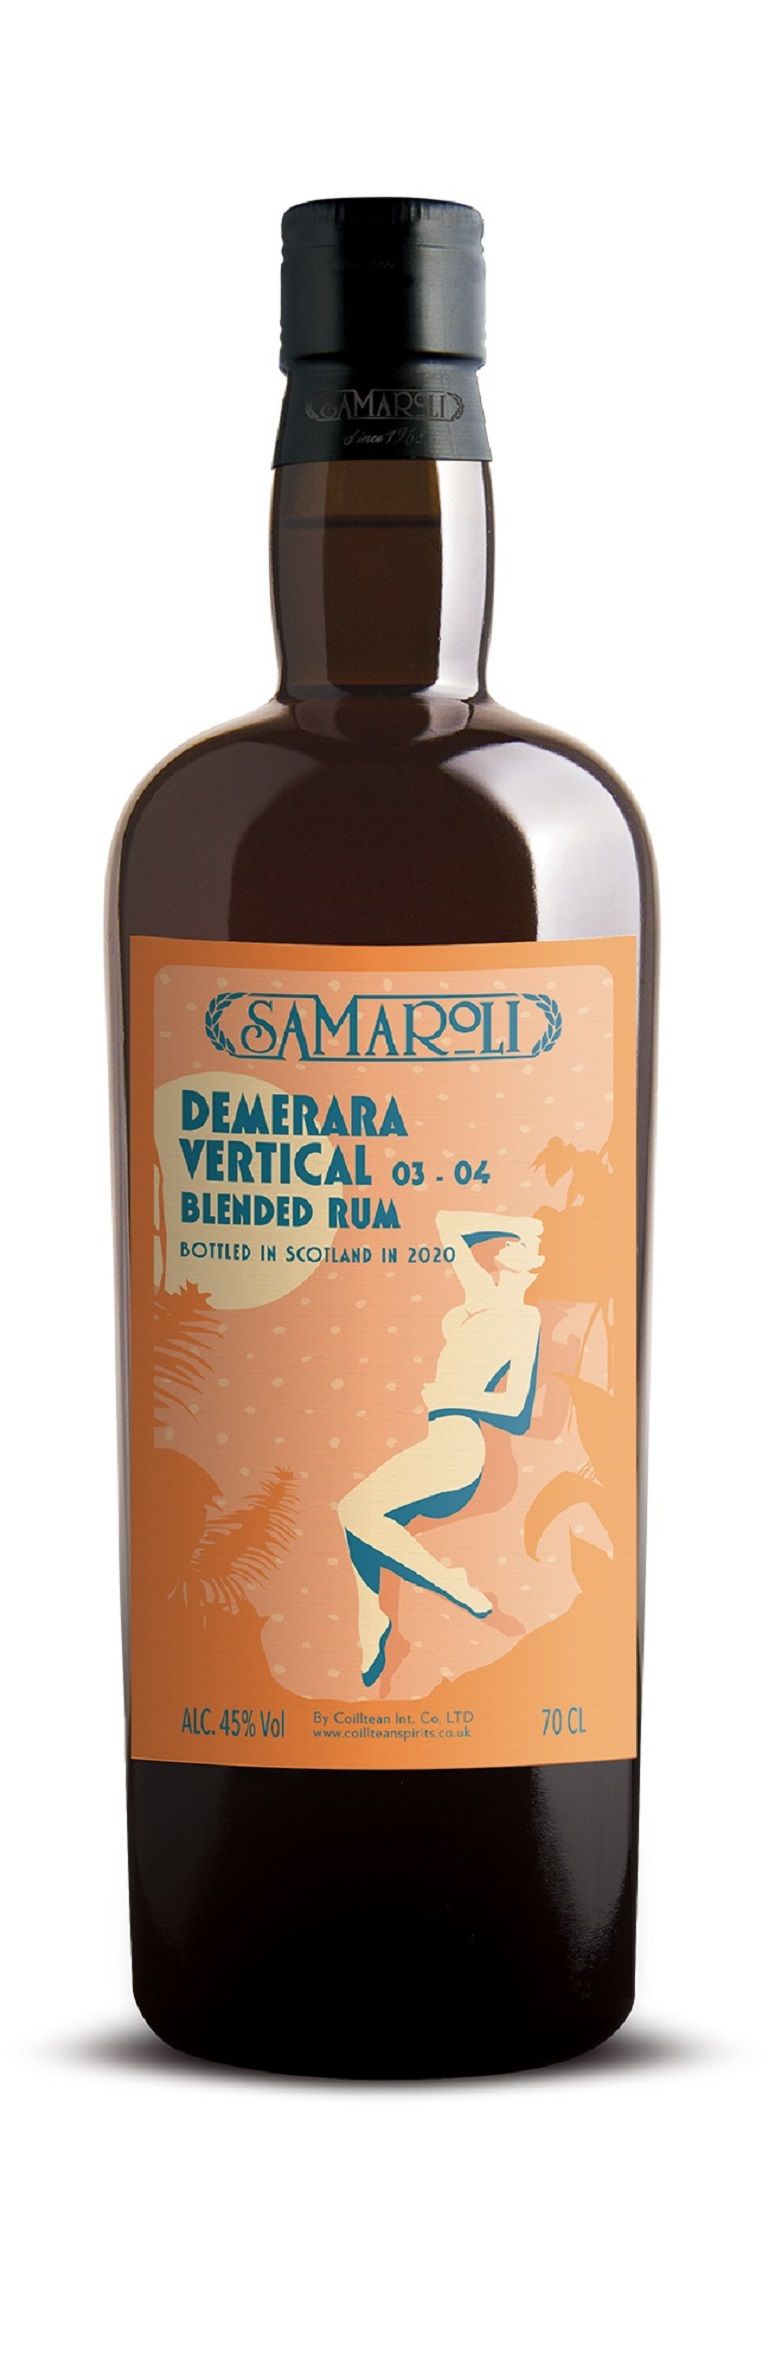 2003-04 Demerara Vertical - Blended Rum - ed. 2020 - 70 cl